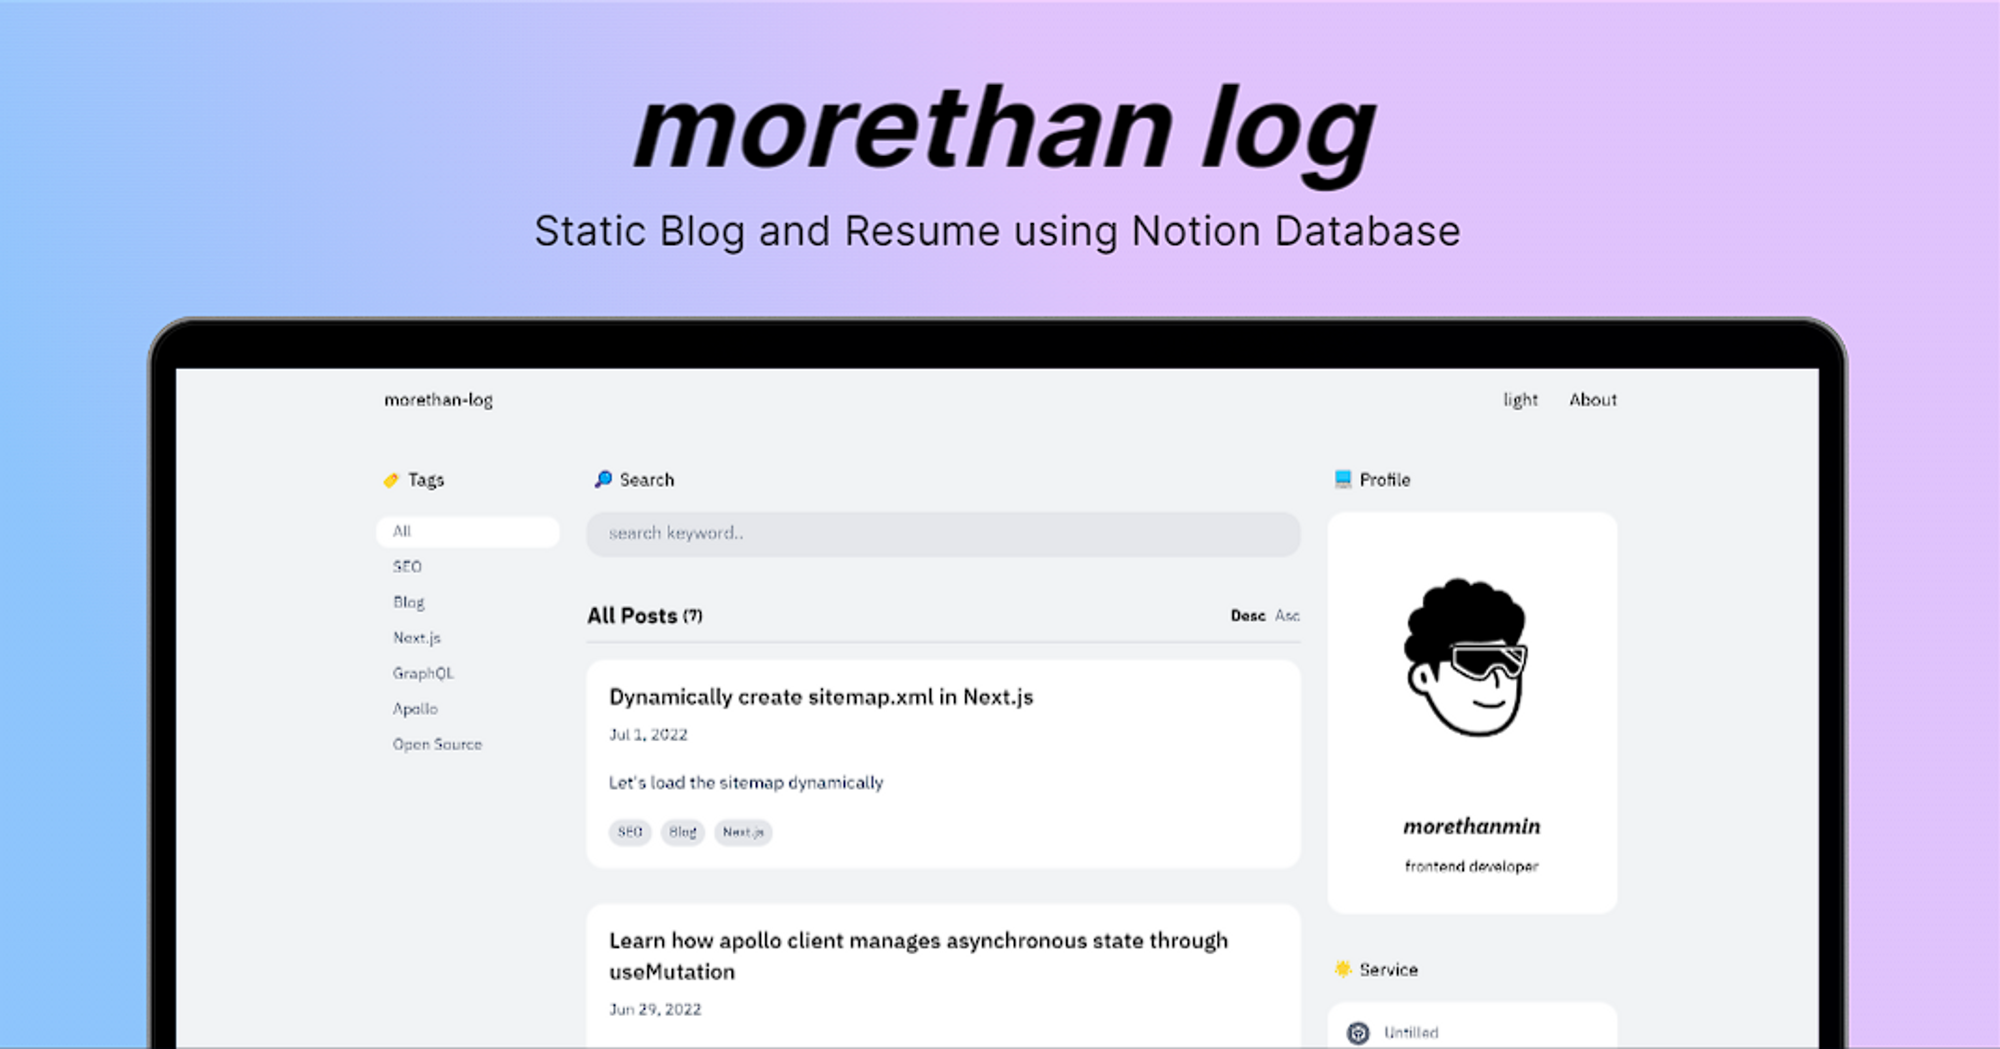 Welcome to morethan log!